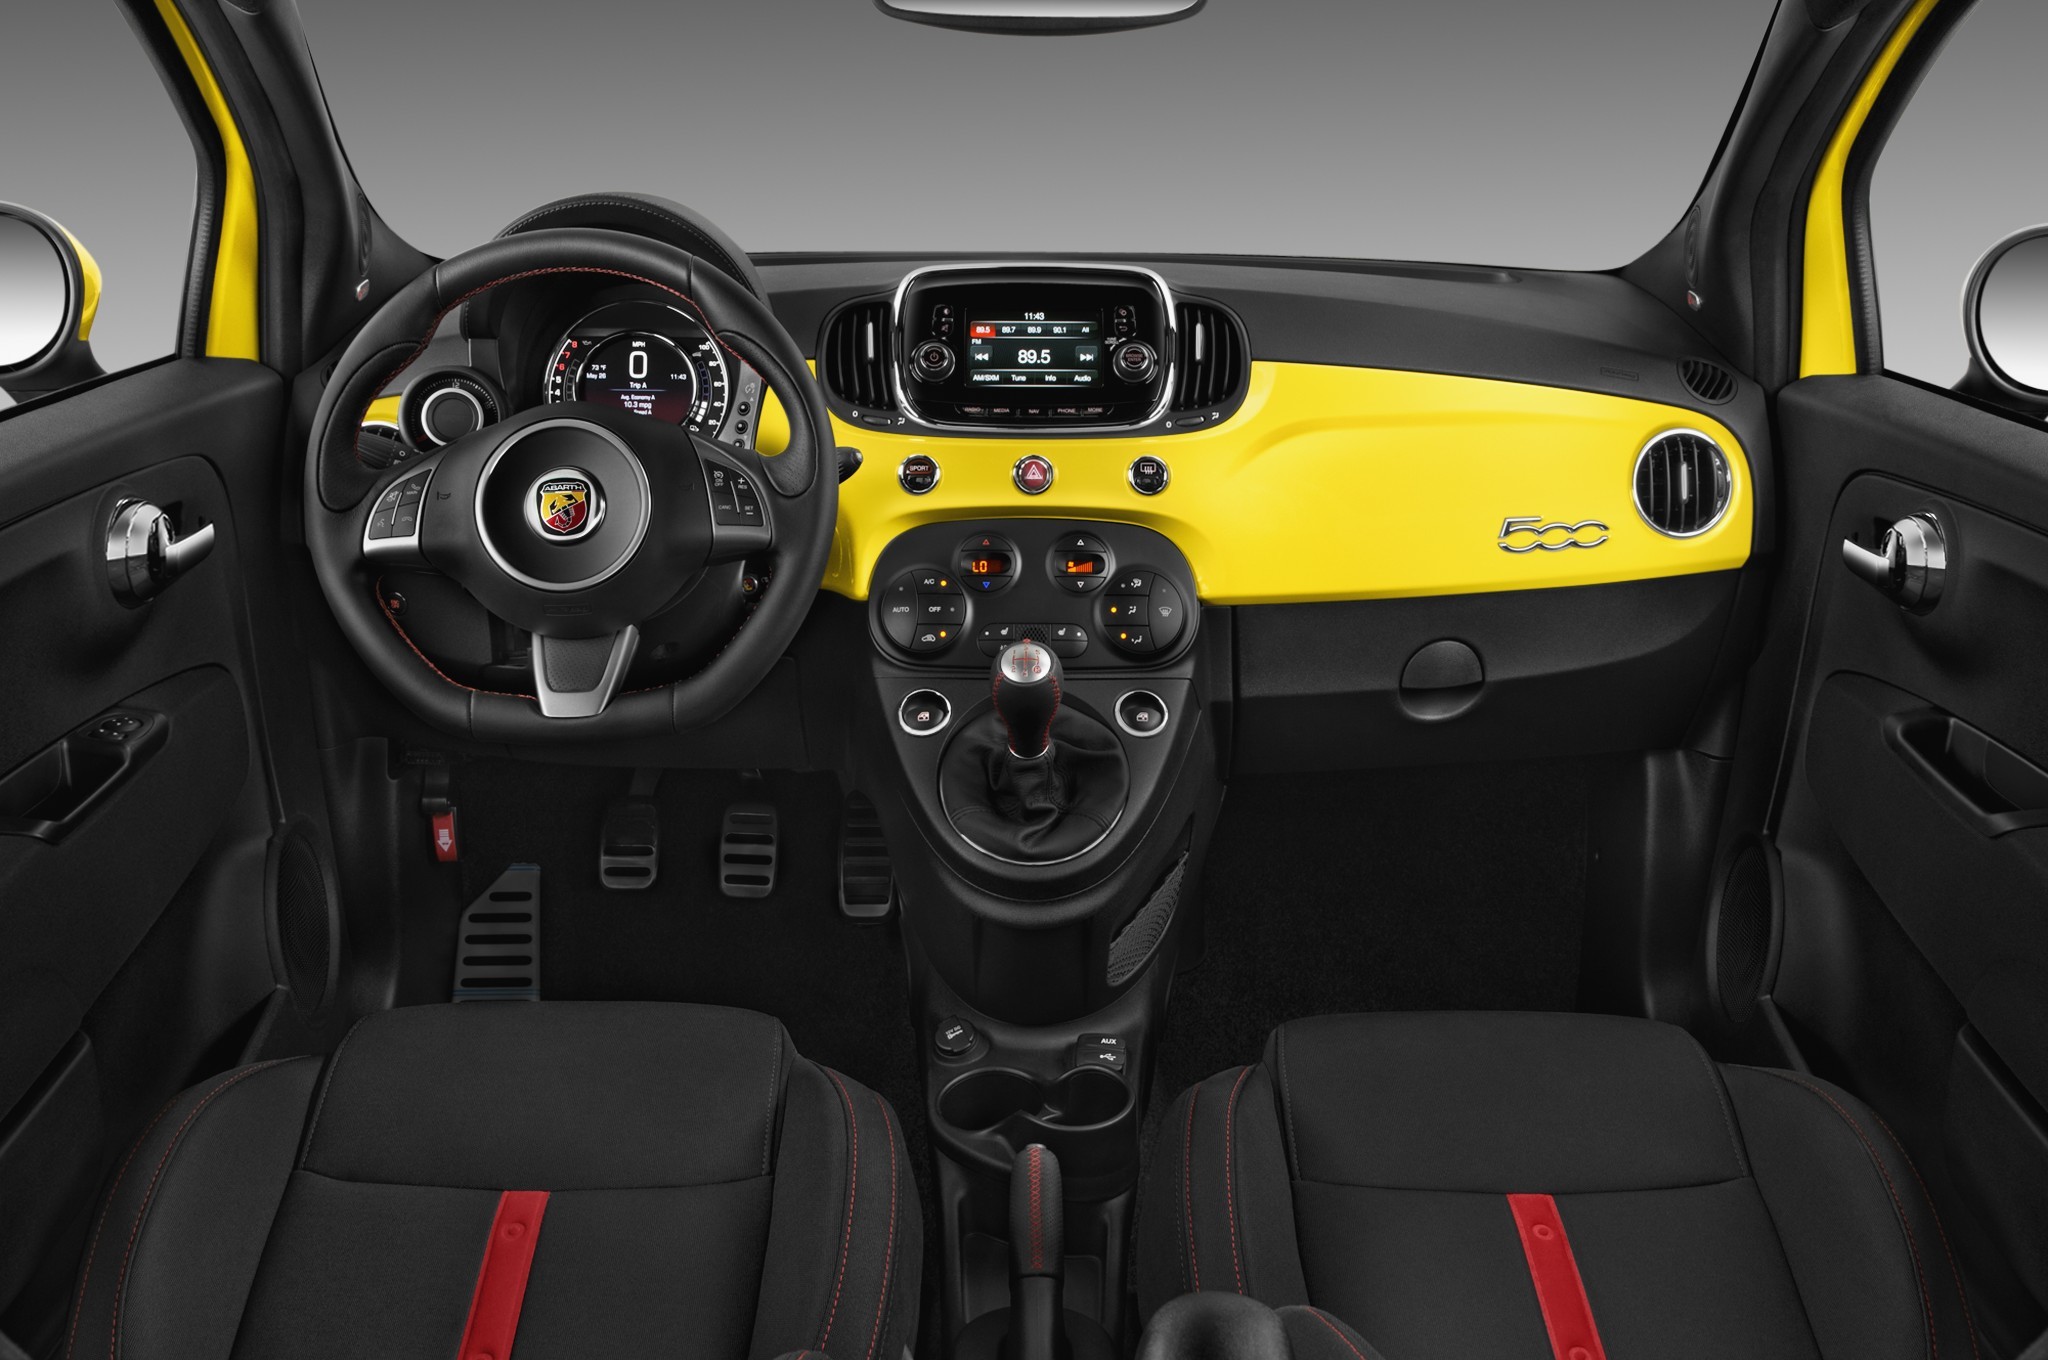 2048x1360 Fiat Abarth Interior Inspirational Fiat Multipla top Gear Wallpaper  1280Ã720 9953 Pictures